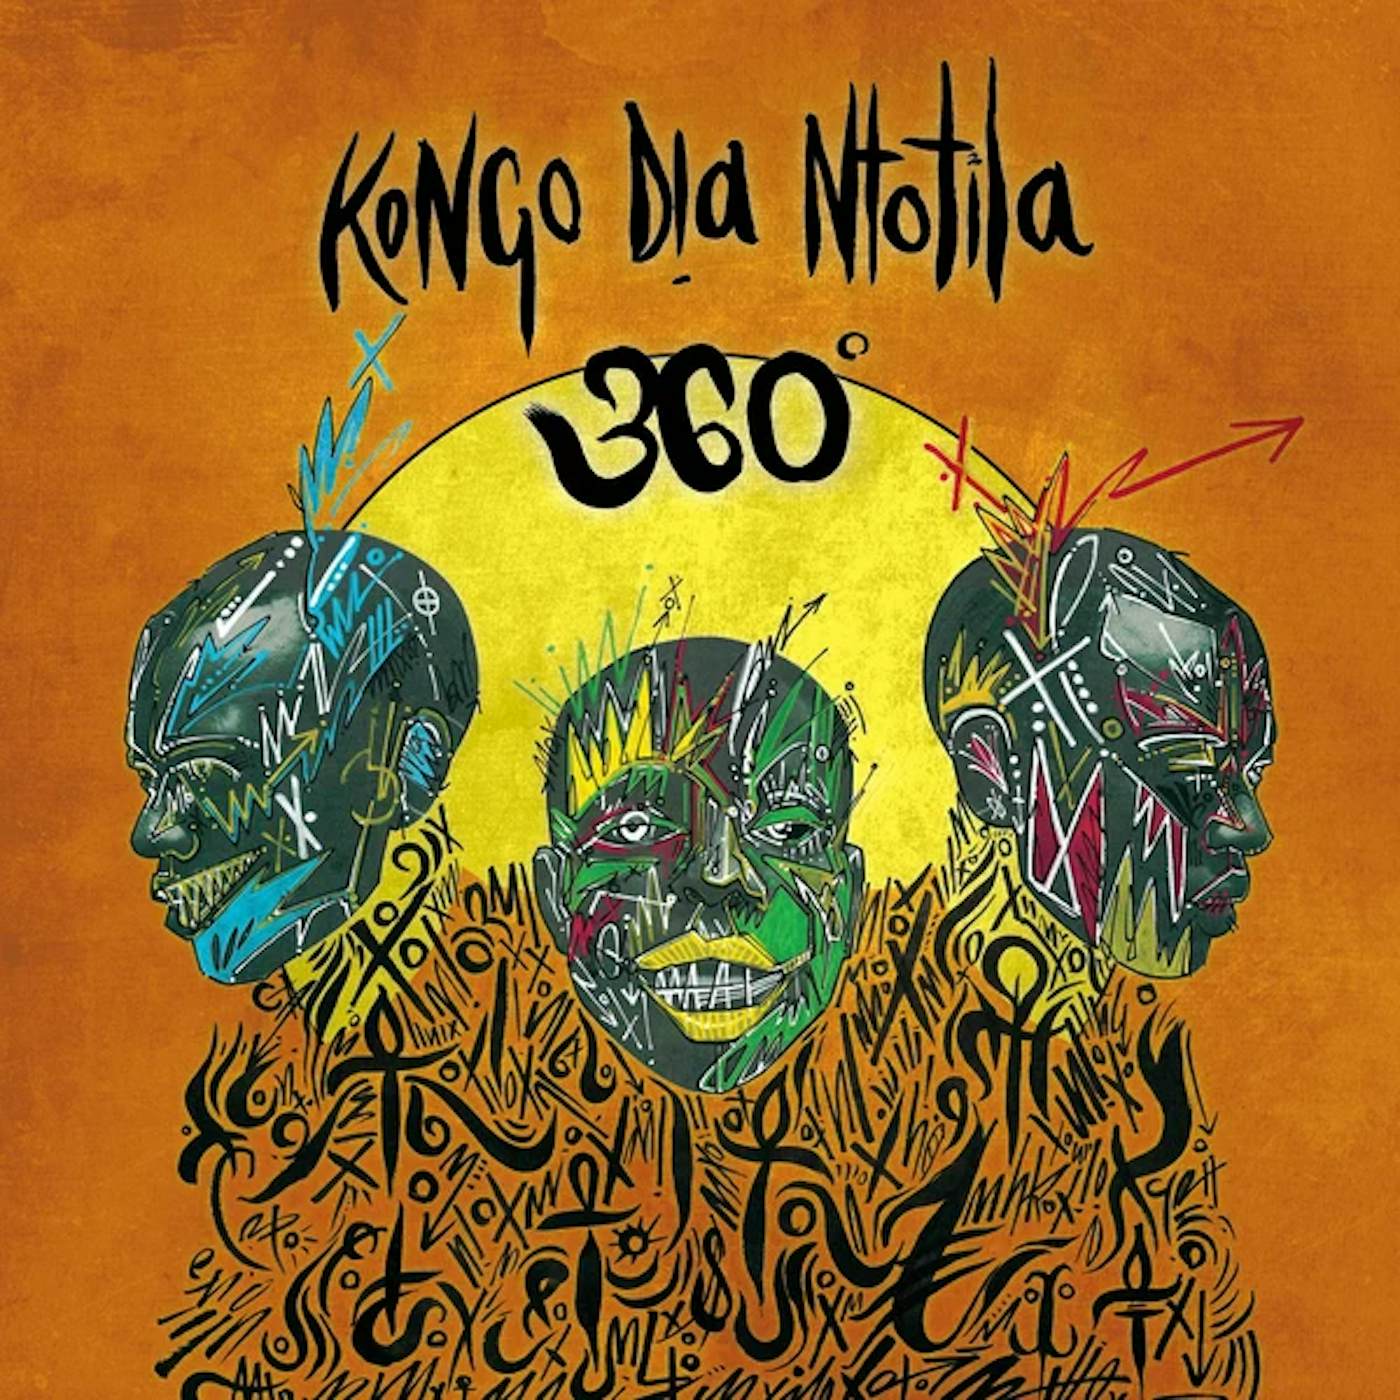 Kongo Dia Ntotila 360° Vinyl Record